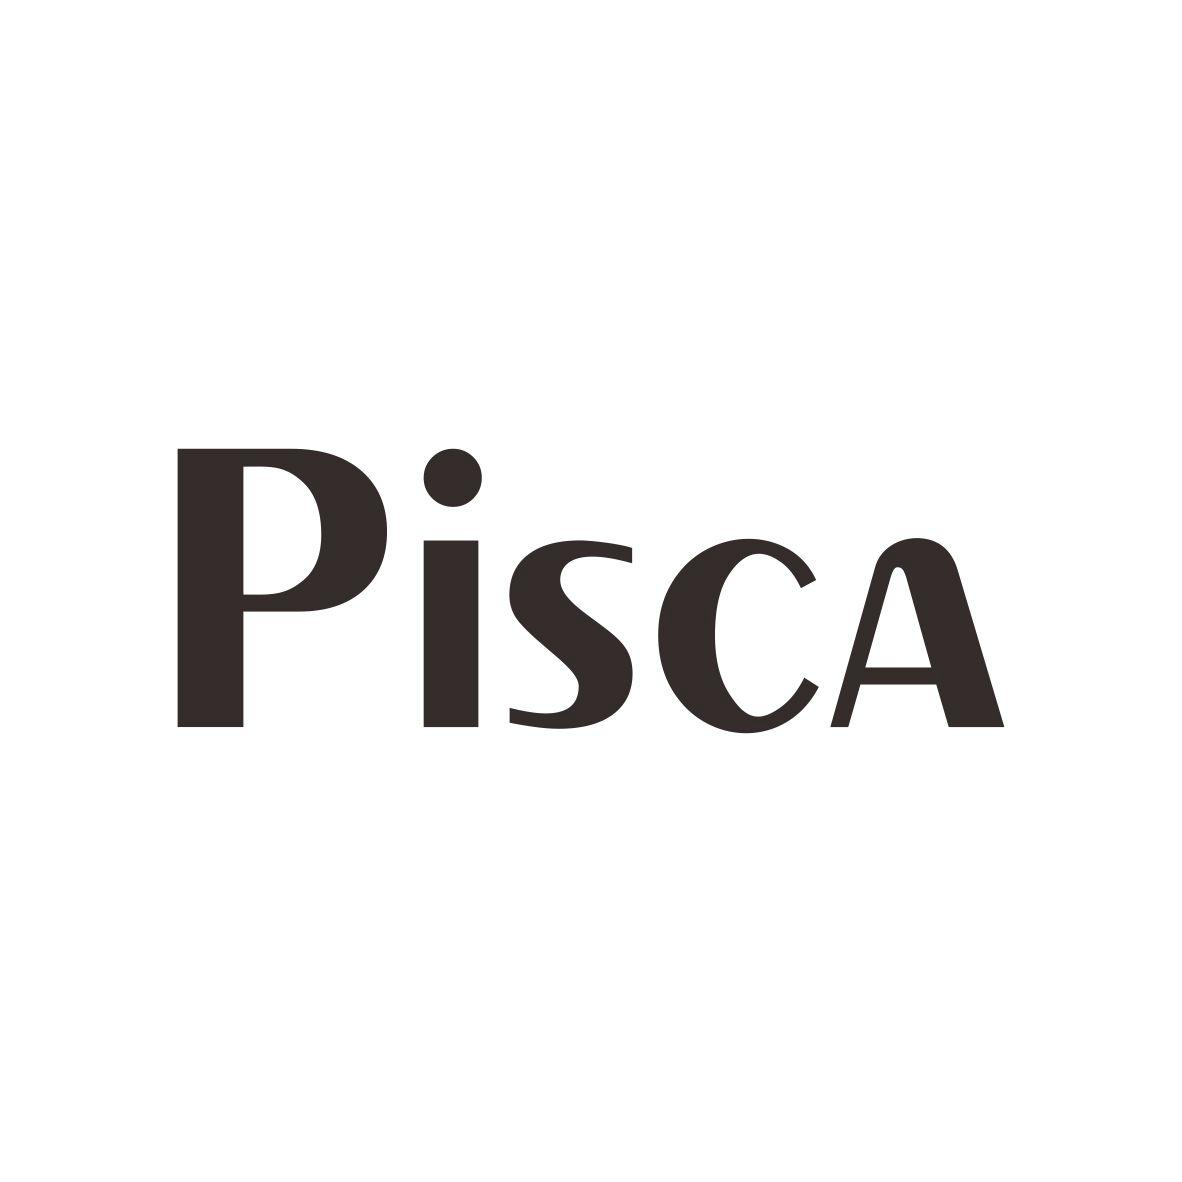 PISCA商标图片